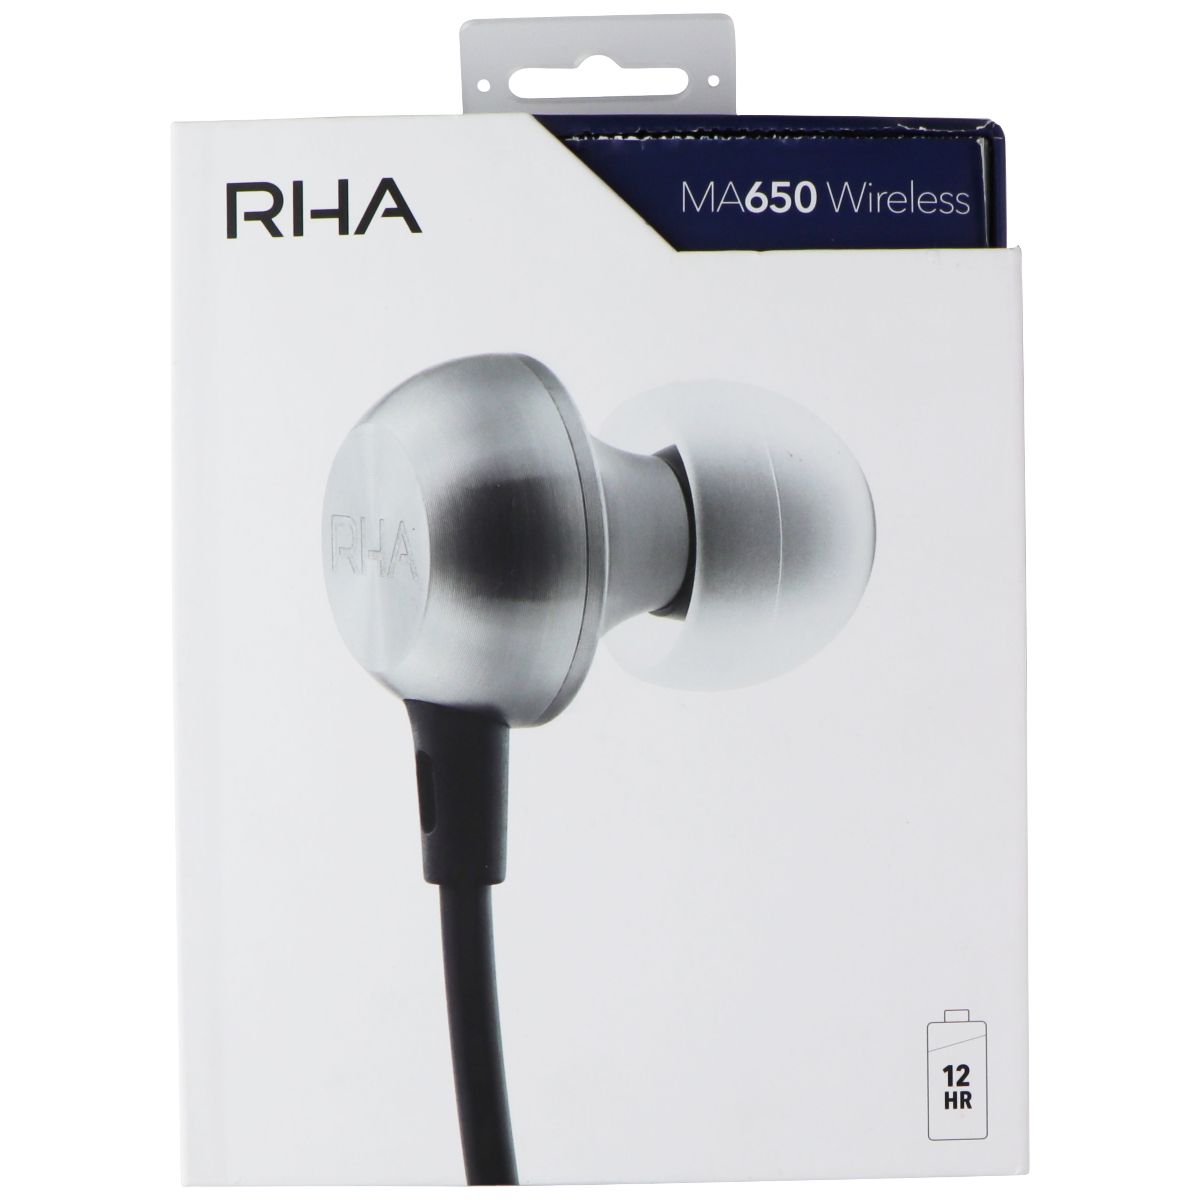 RHA MA650 Wireless Sweat-Proof Bluetooth in-Ear Headphones - Silver/Black Portable Audio - Headphones RHA    - Simple Cell Bulk Wholesale Pricing - USA Seller